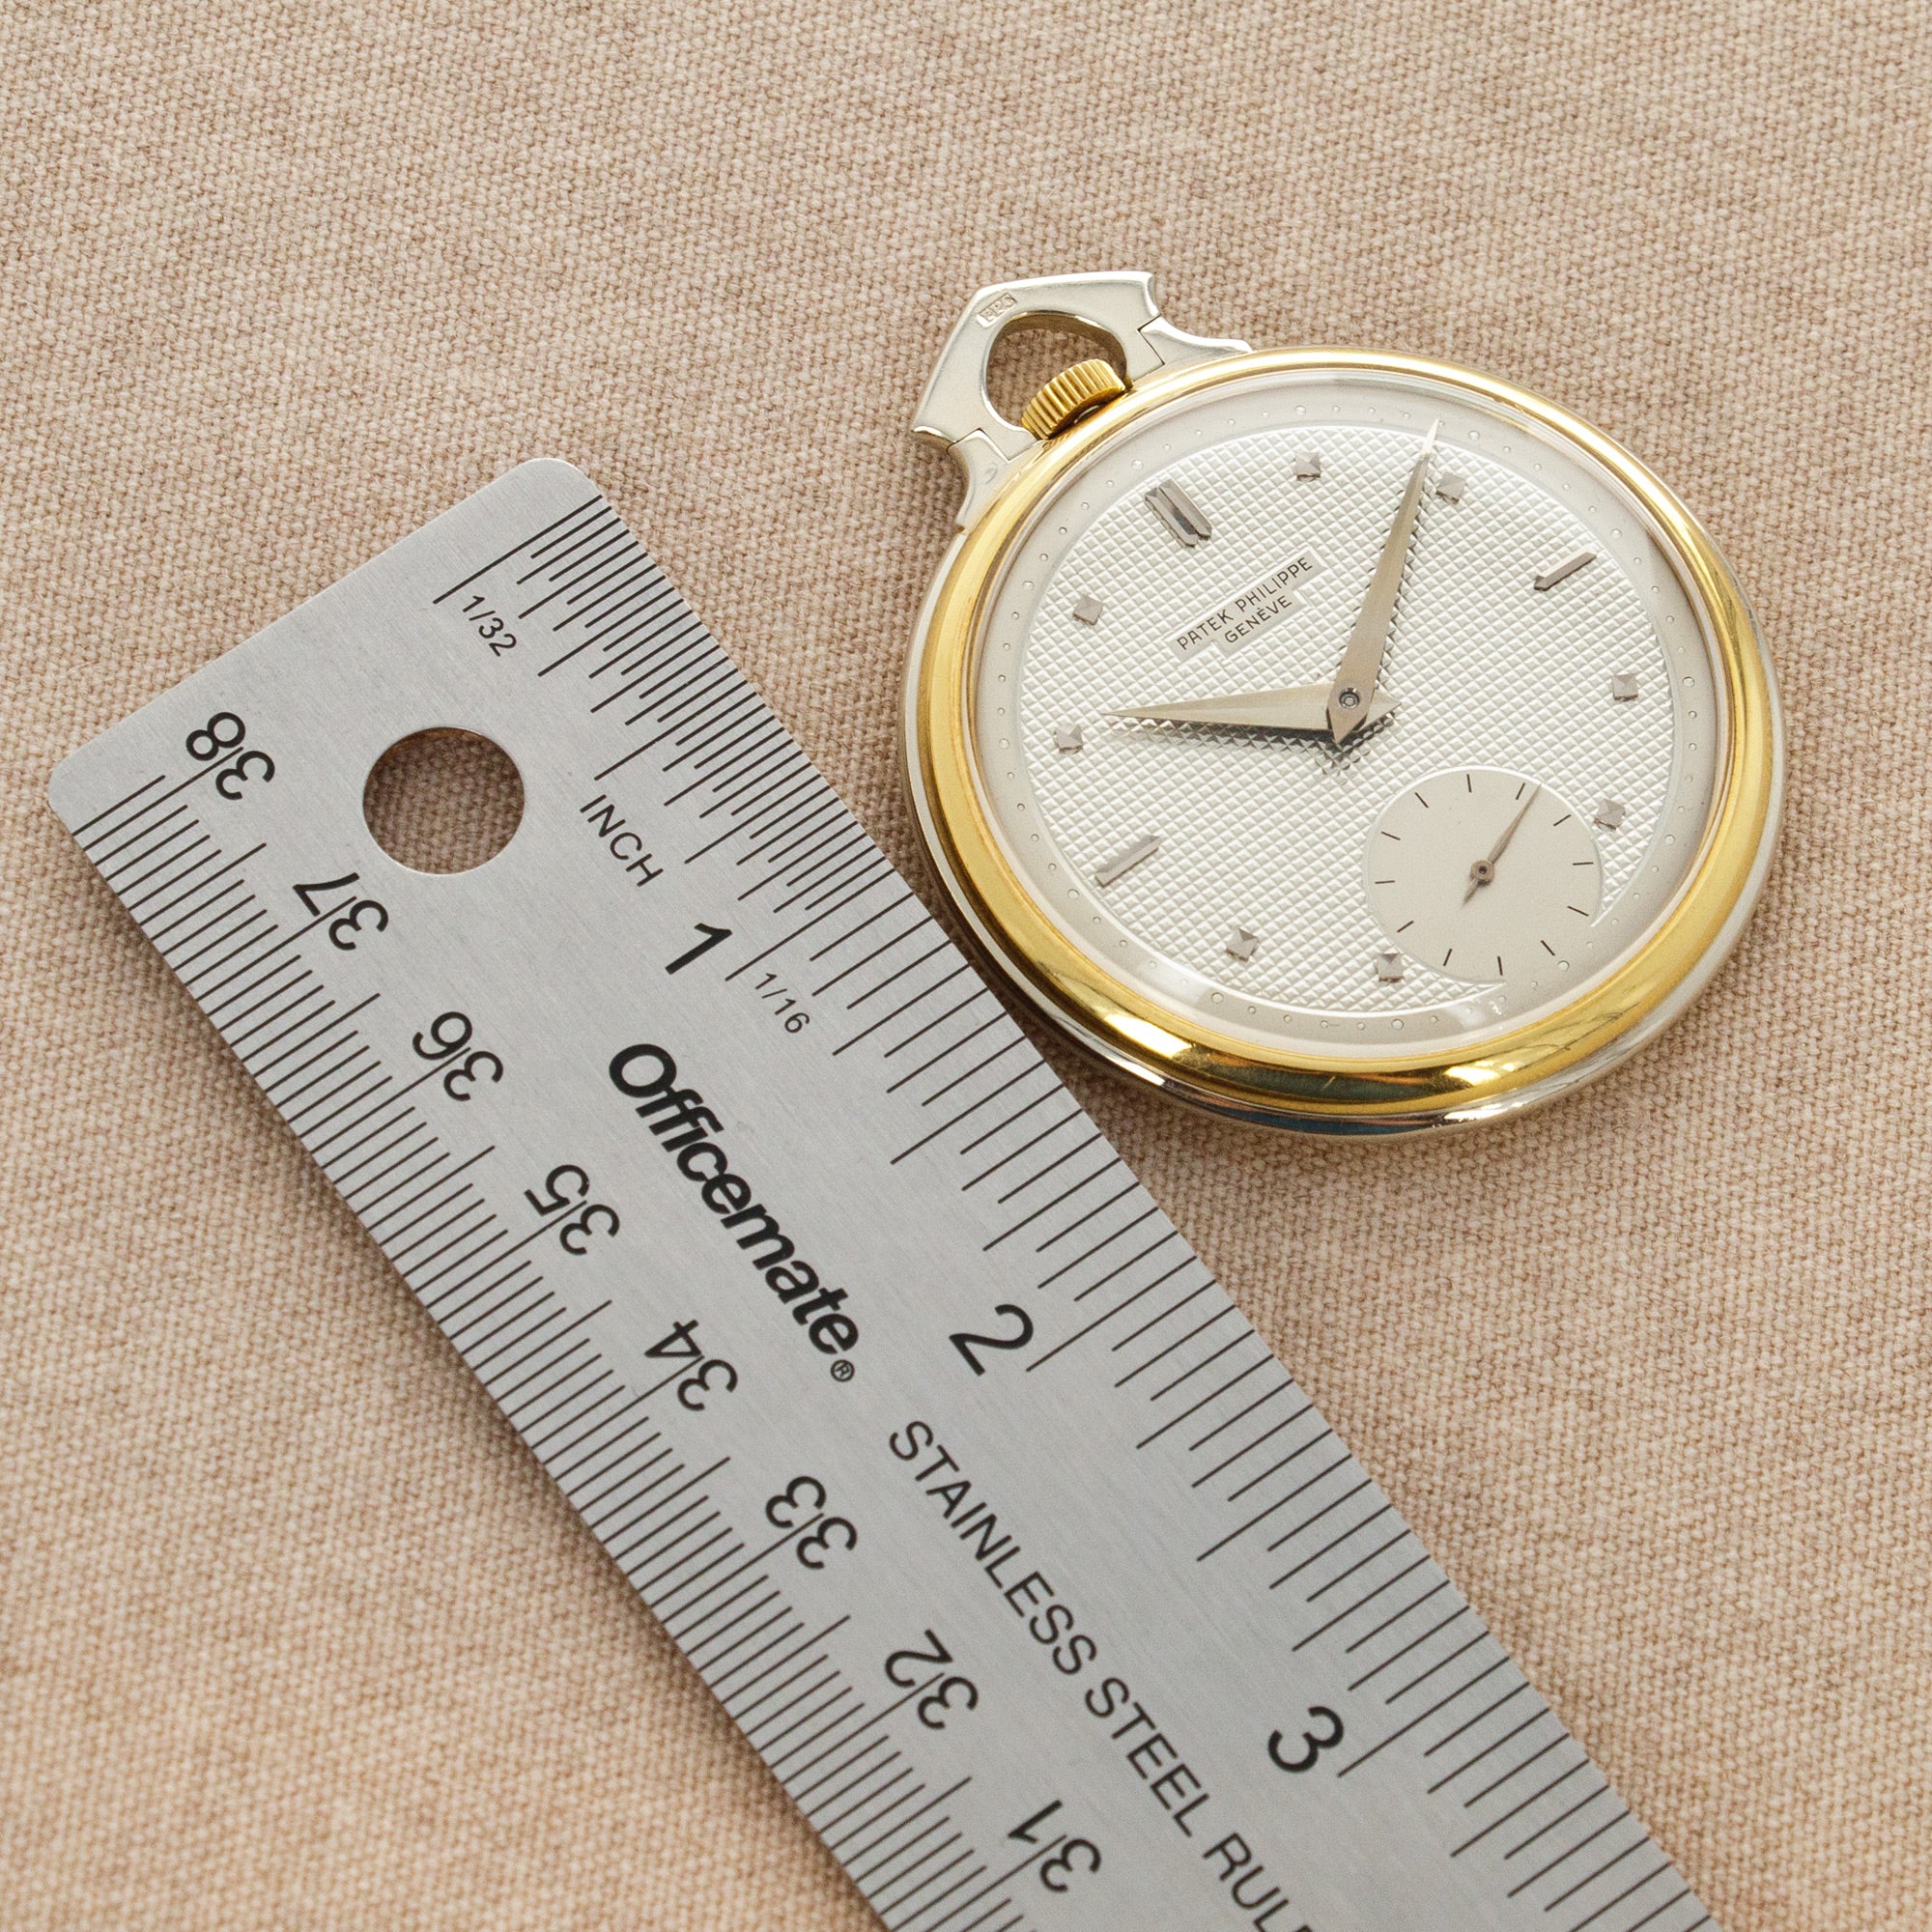 Patek Philippe - Patek Philippe White &amp; Yellow Gold Pocket Watch - The Keystone Watches